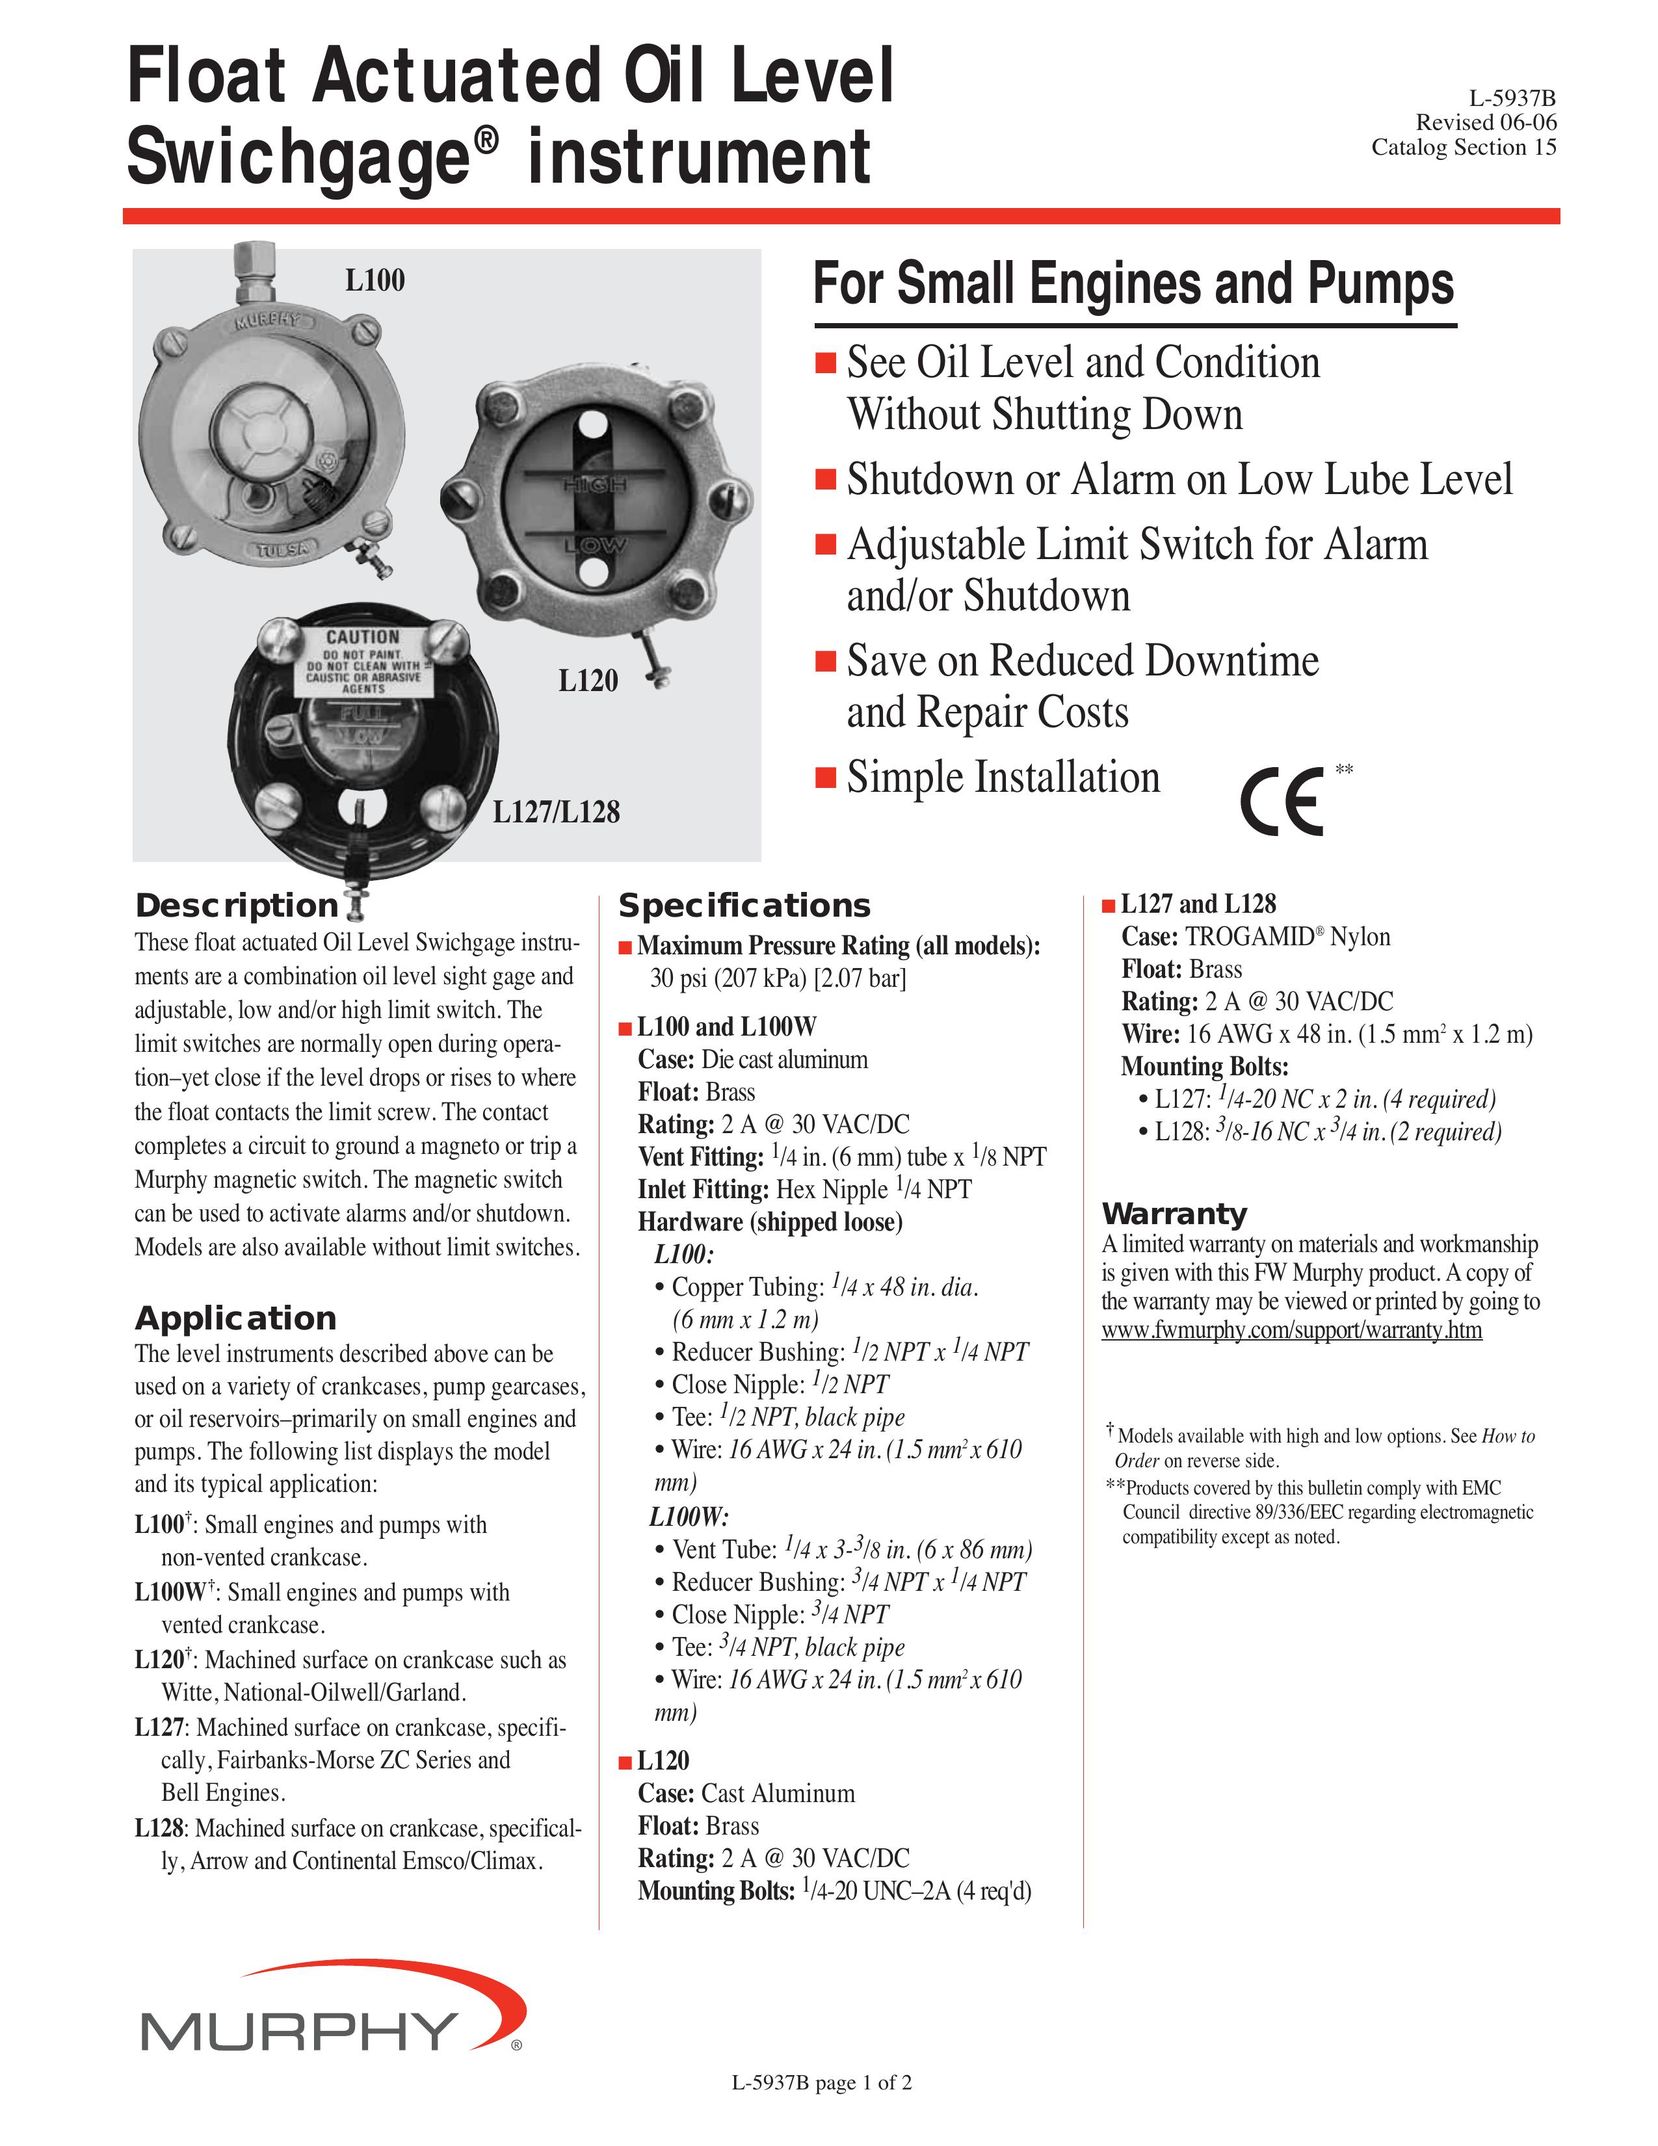 Murphy L-5937B Switch User Manual